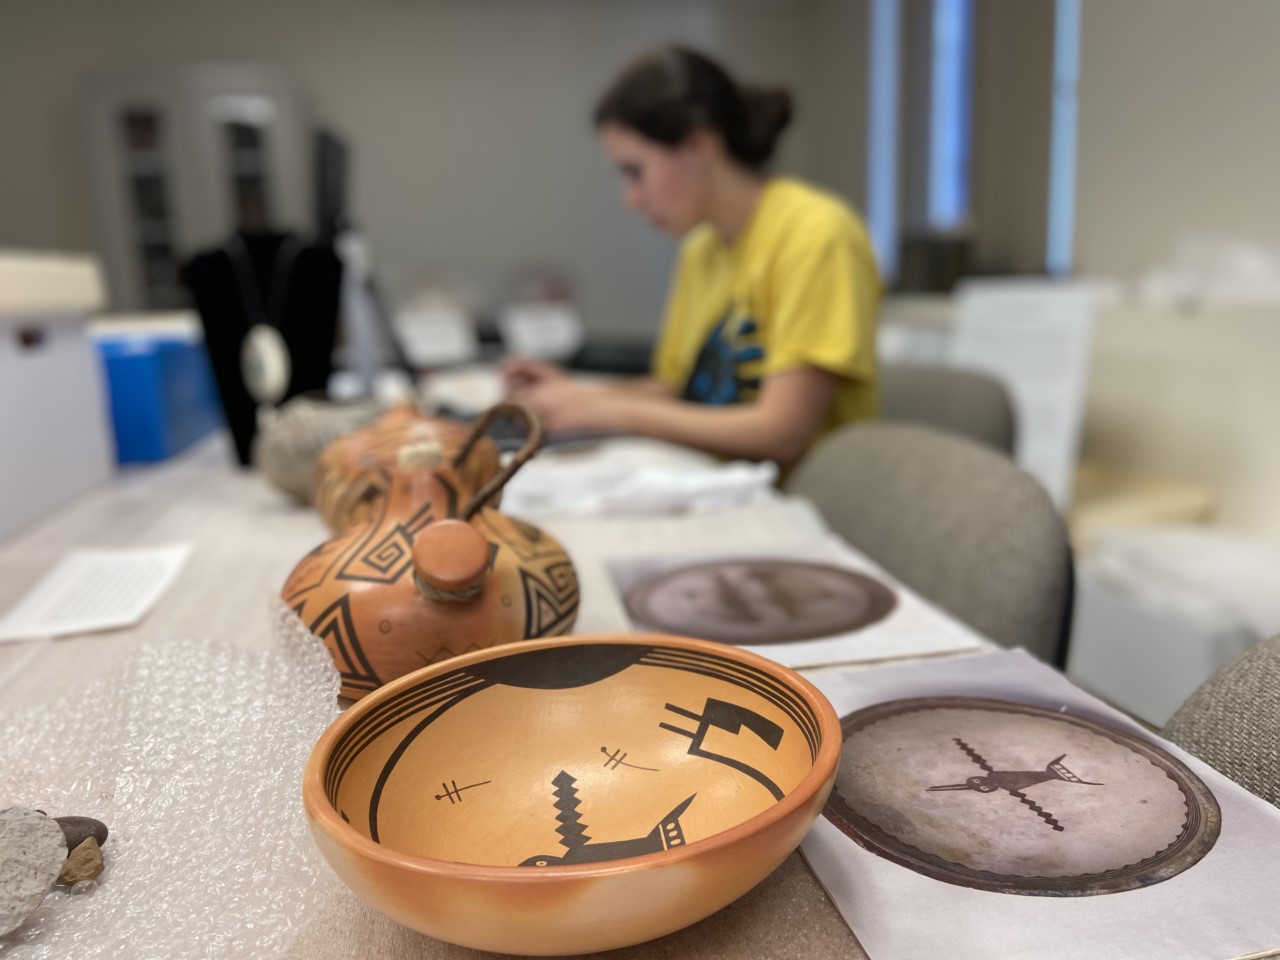 Student working at desk inventorying ceramics